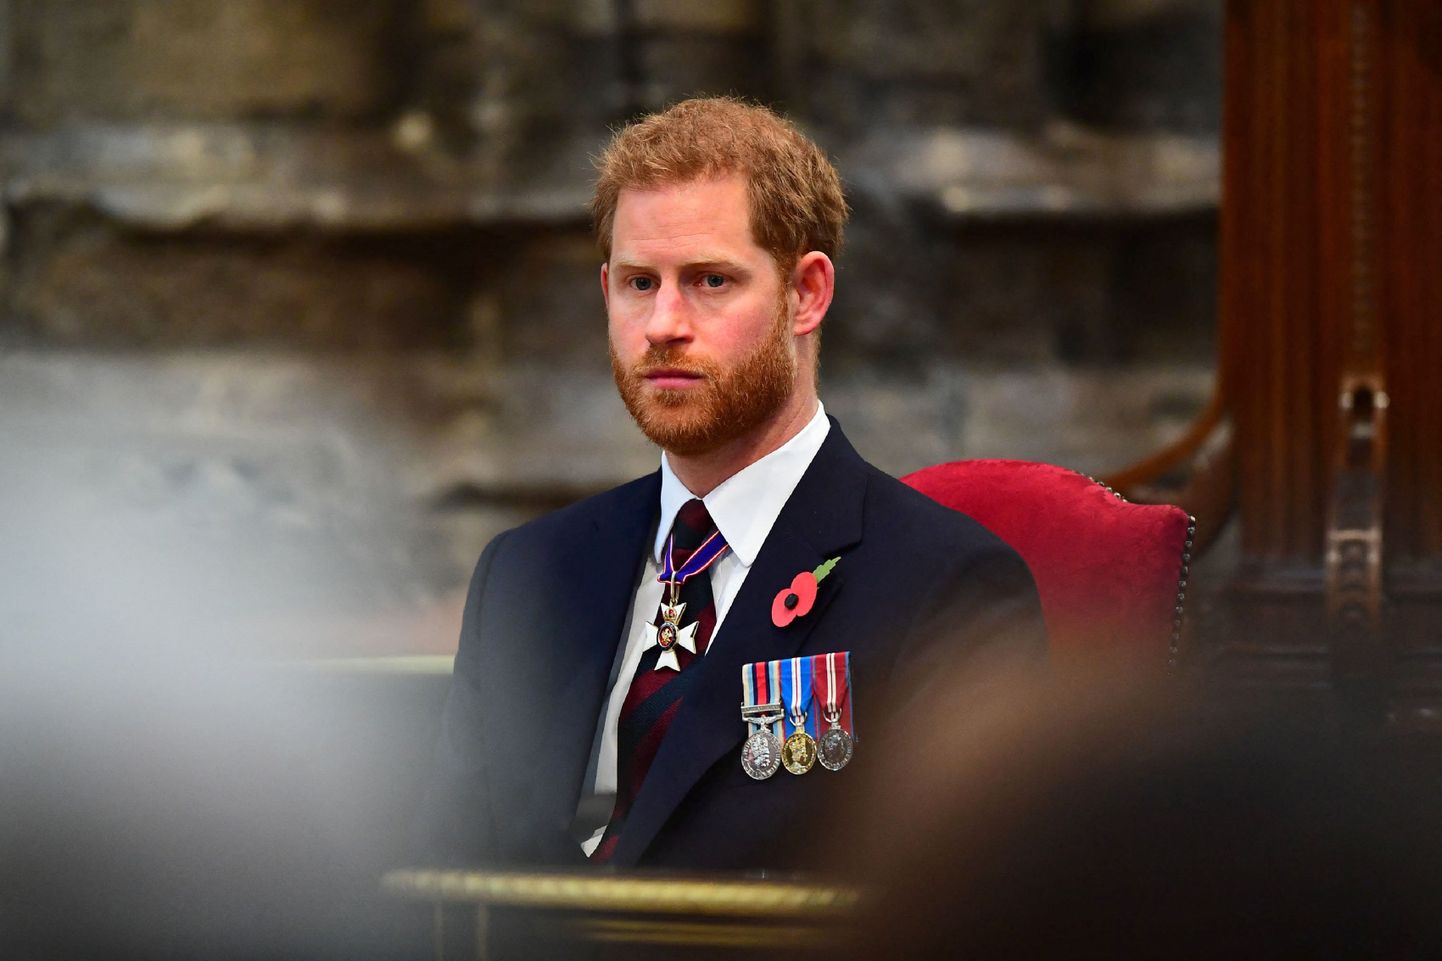 Prints Harry aastal 2019 Westminster Abbey katedraalis. (Photo by Victoria Jones / POOL / AFP)